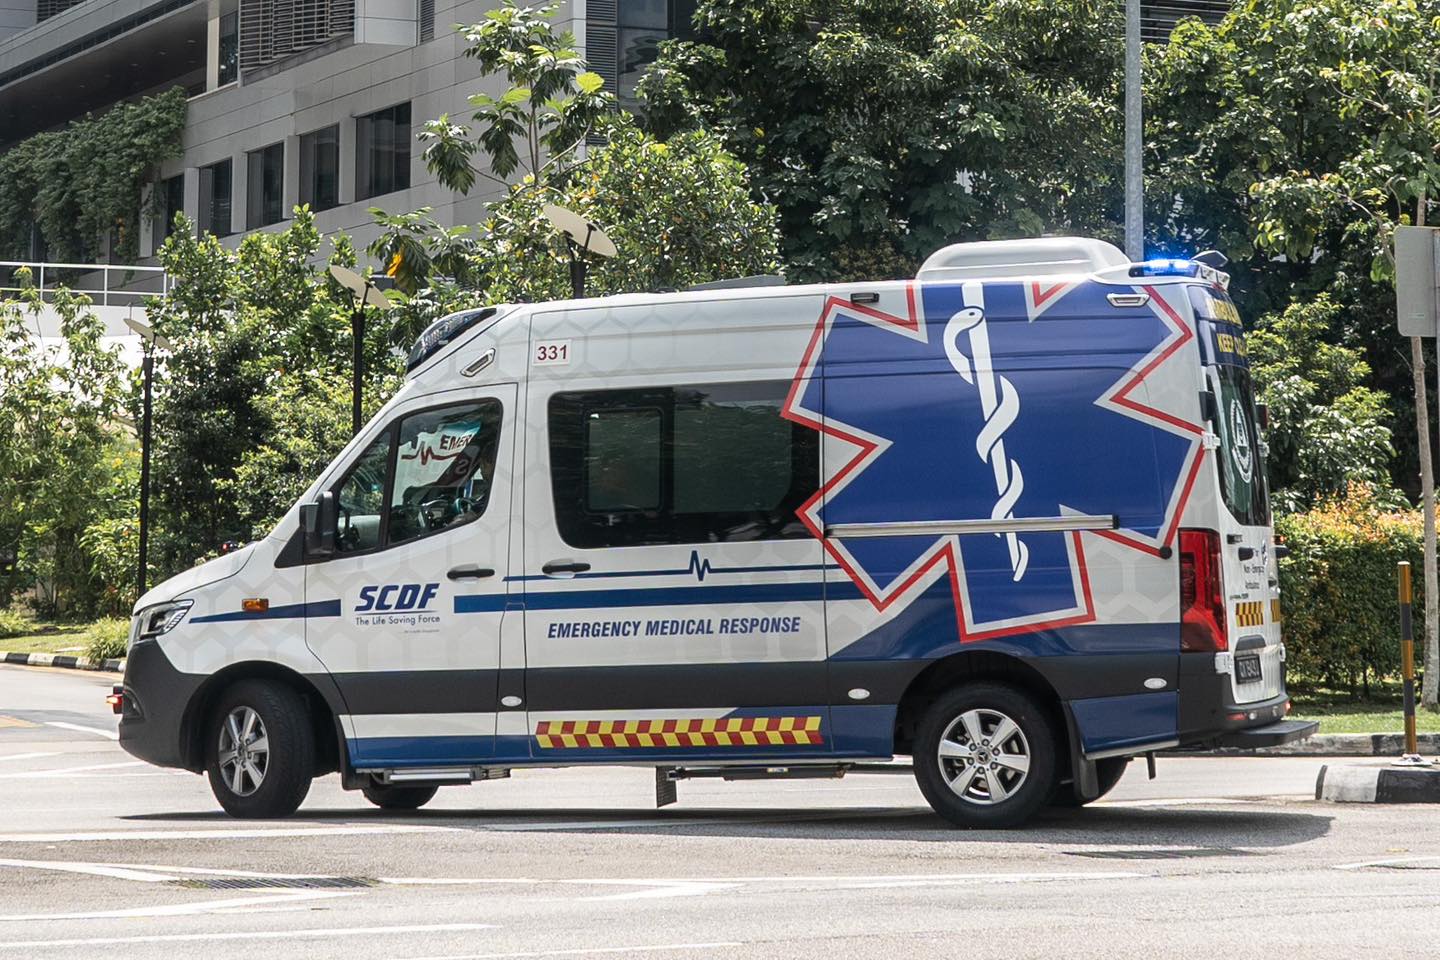 SCDF ambulance response